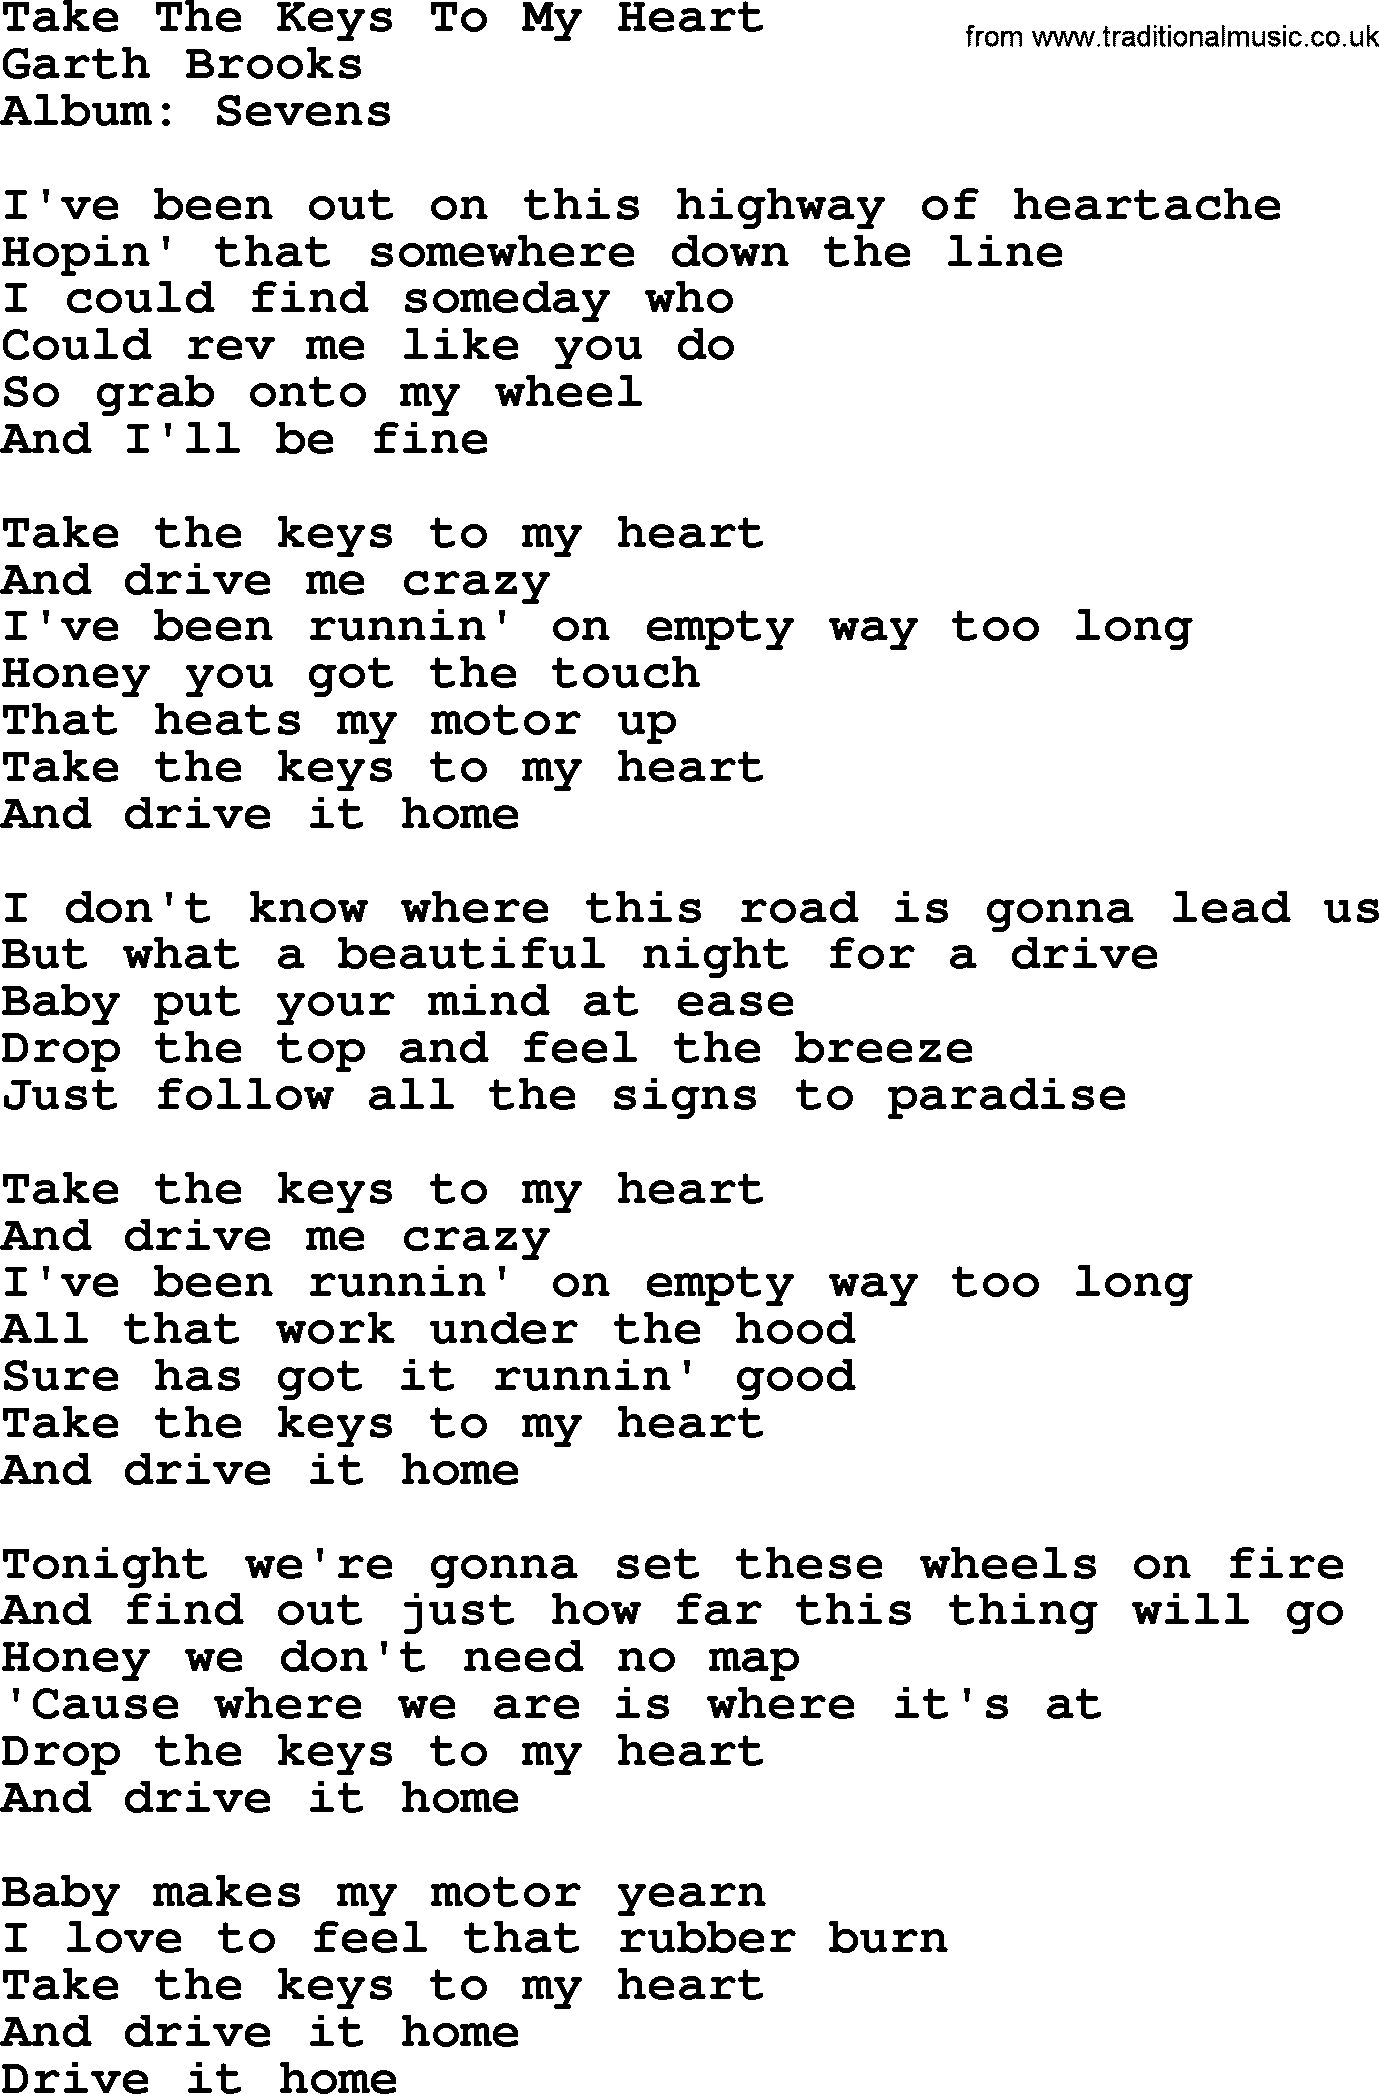 Garth Brooks song: Take The Keys To My Heart, lyrics